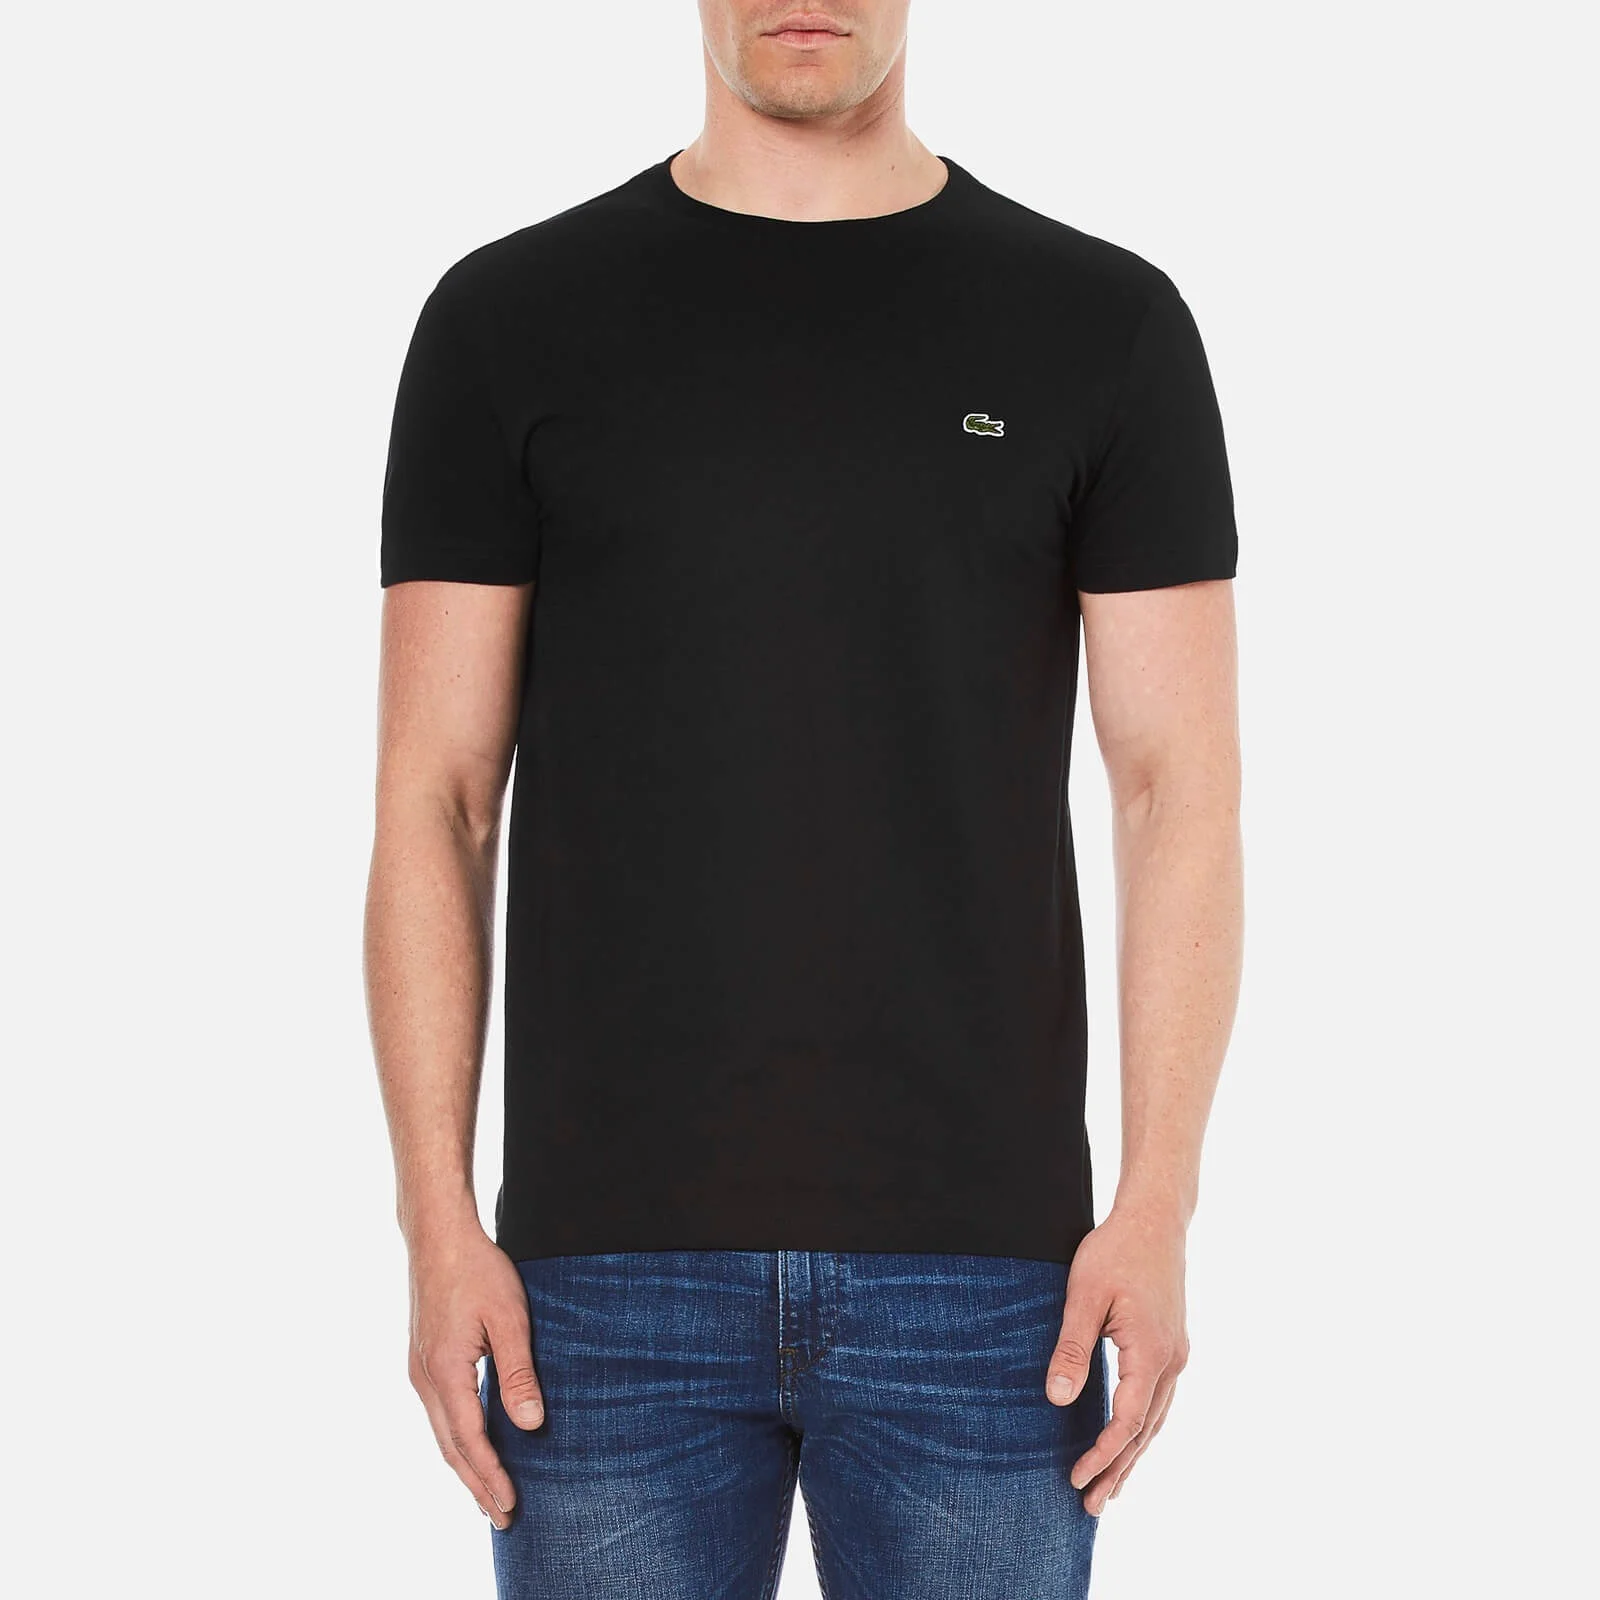 Lacoste Men's Short Sleeve Crew Neck T-Shirt - Black Image 1